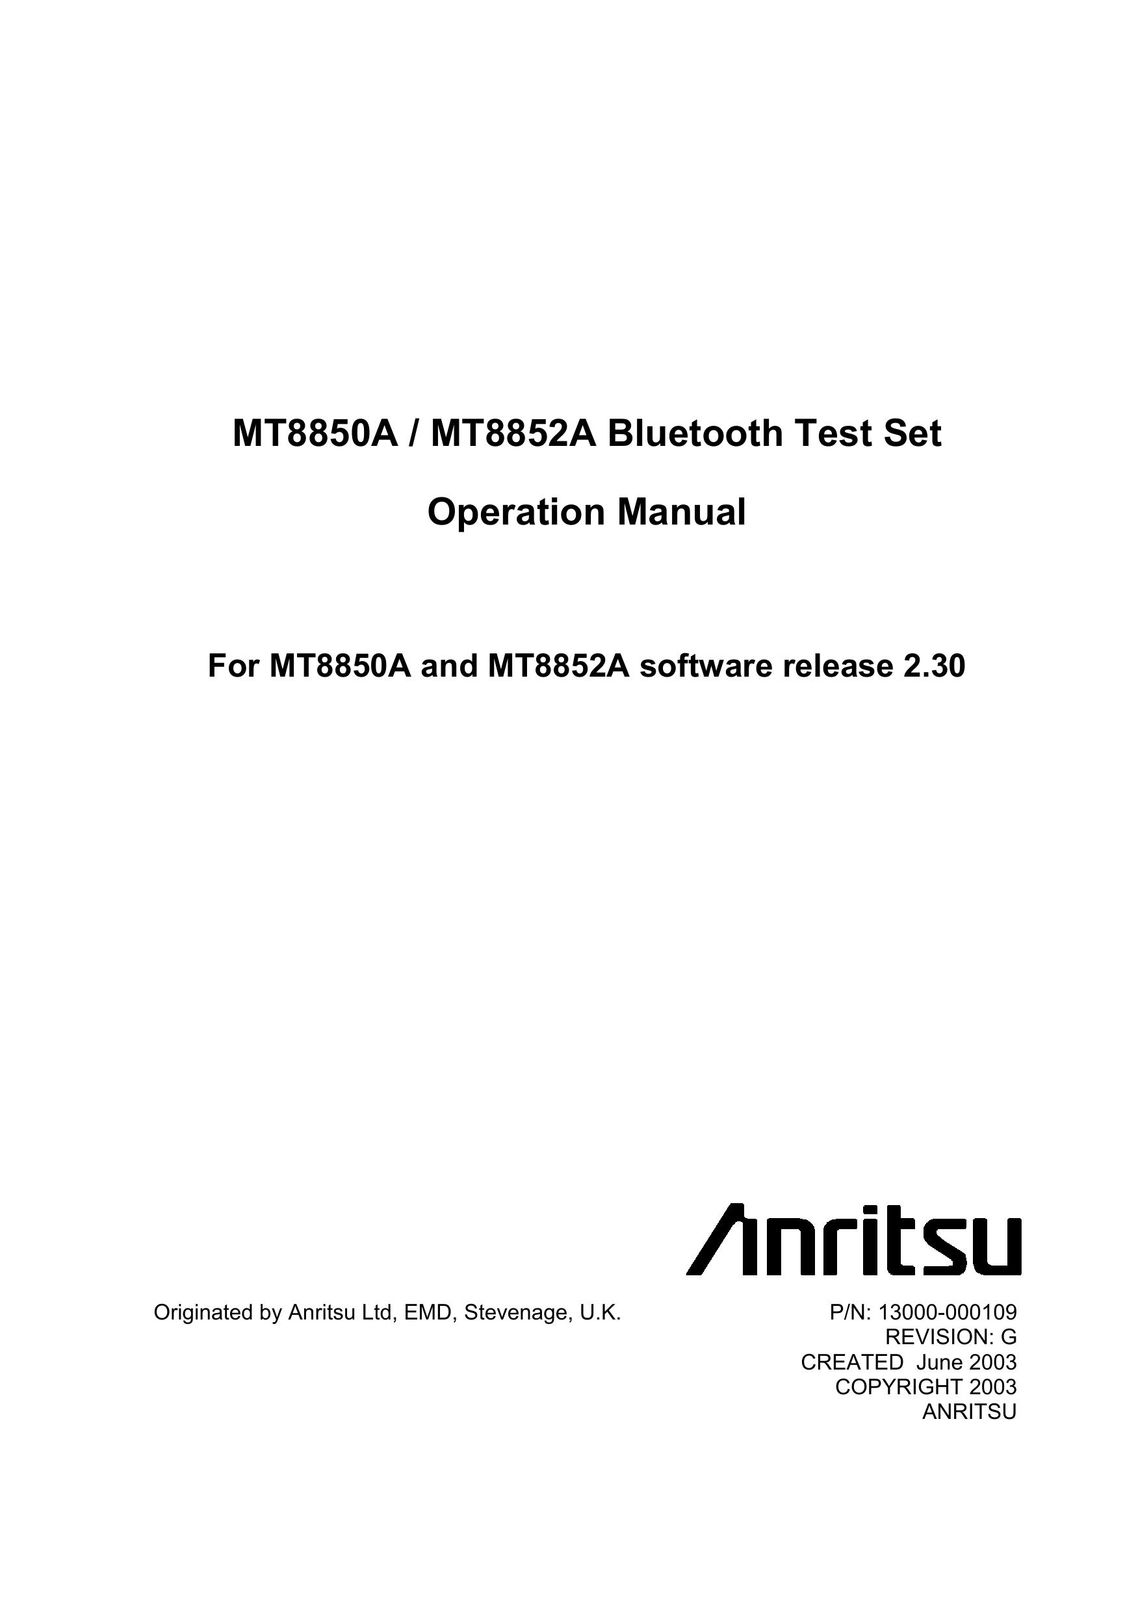 Anritsu MT8852A Bluetooth Headset User Manual